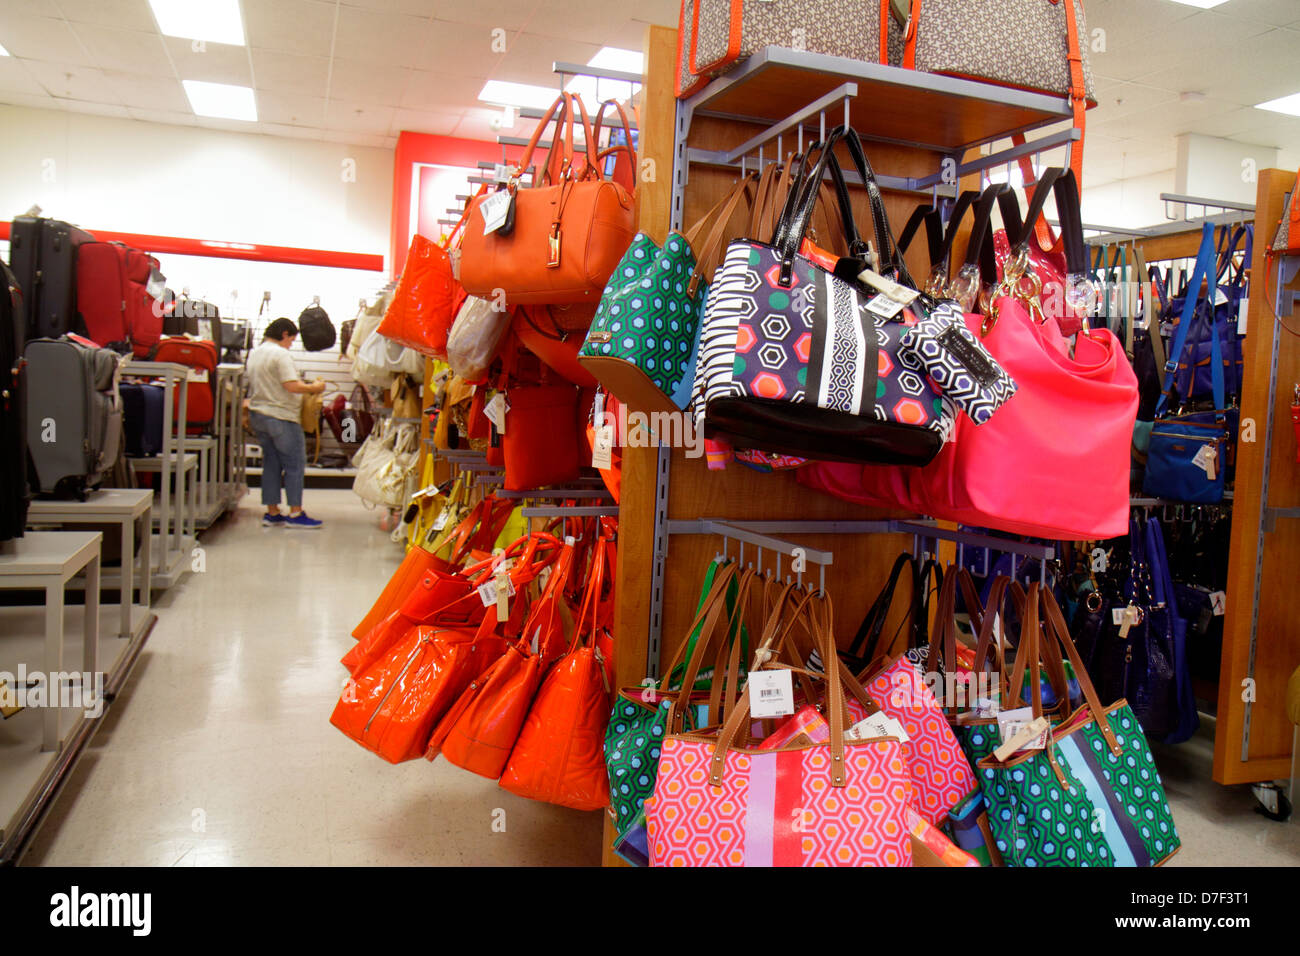 Shop display of handbags -Fotos und -Bildmaterial in hoher Auflösung – Alamy